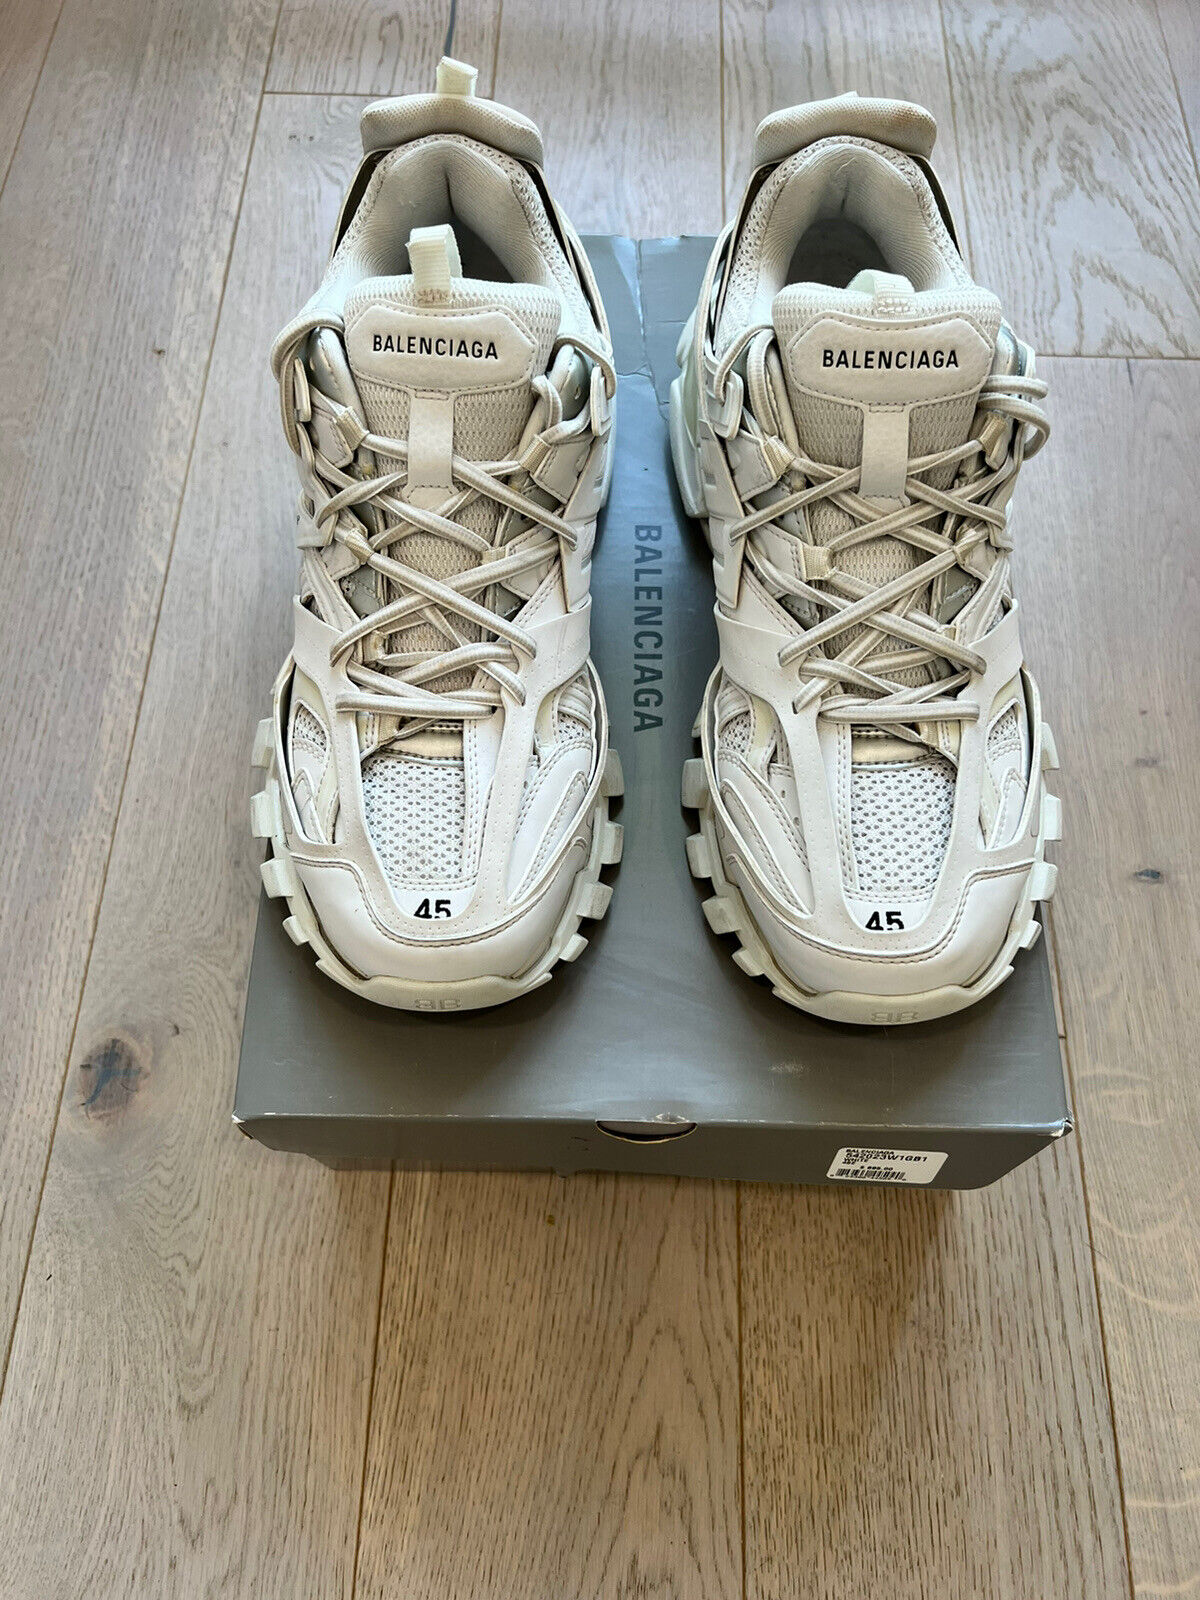 Balenciaga Track Sneakers “White” size 45eu/12us